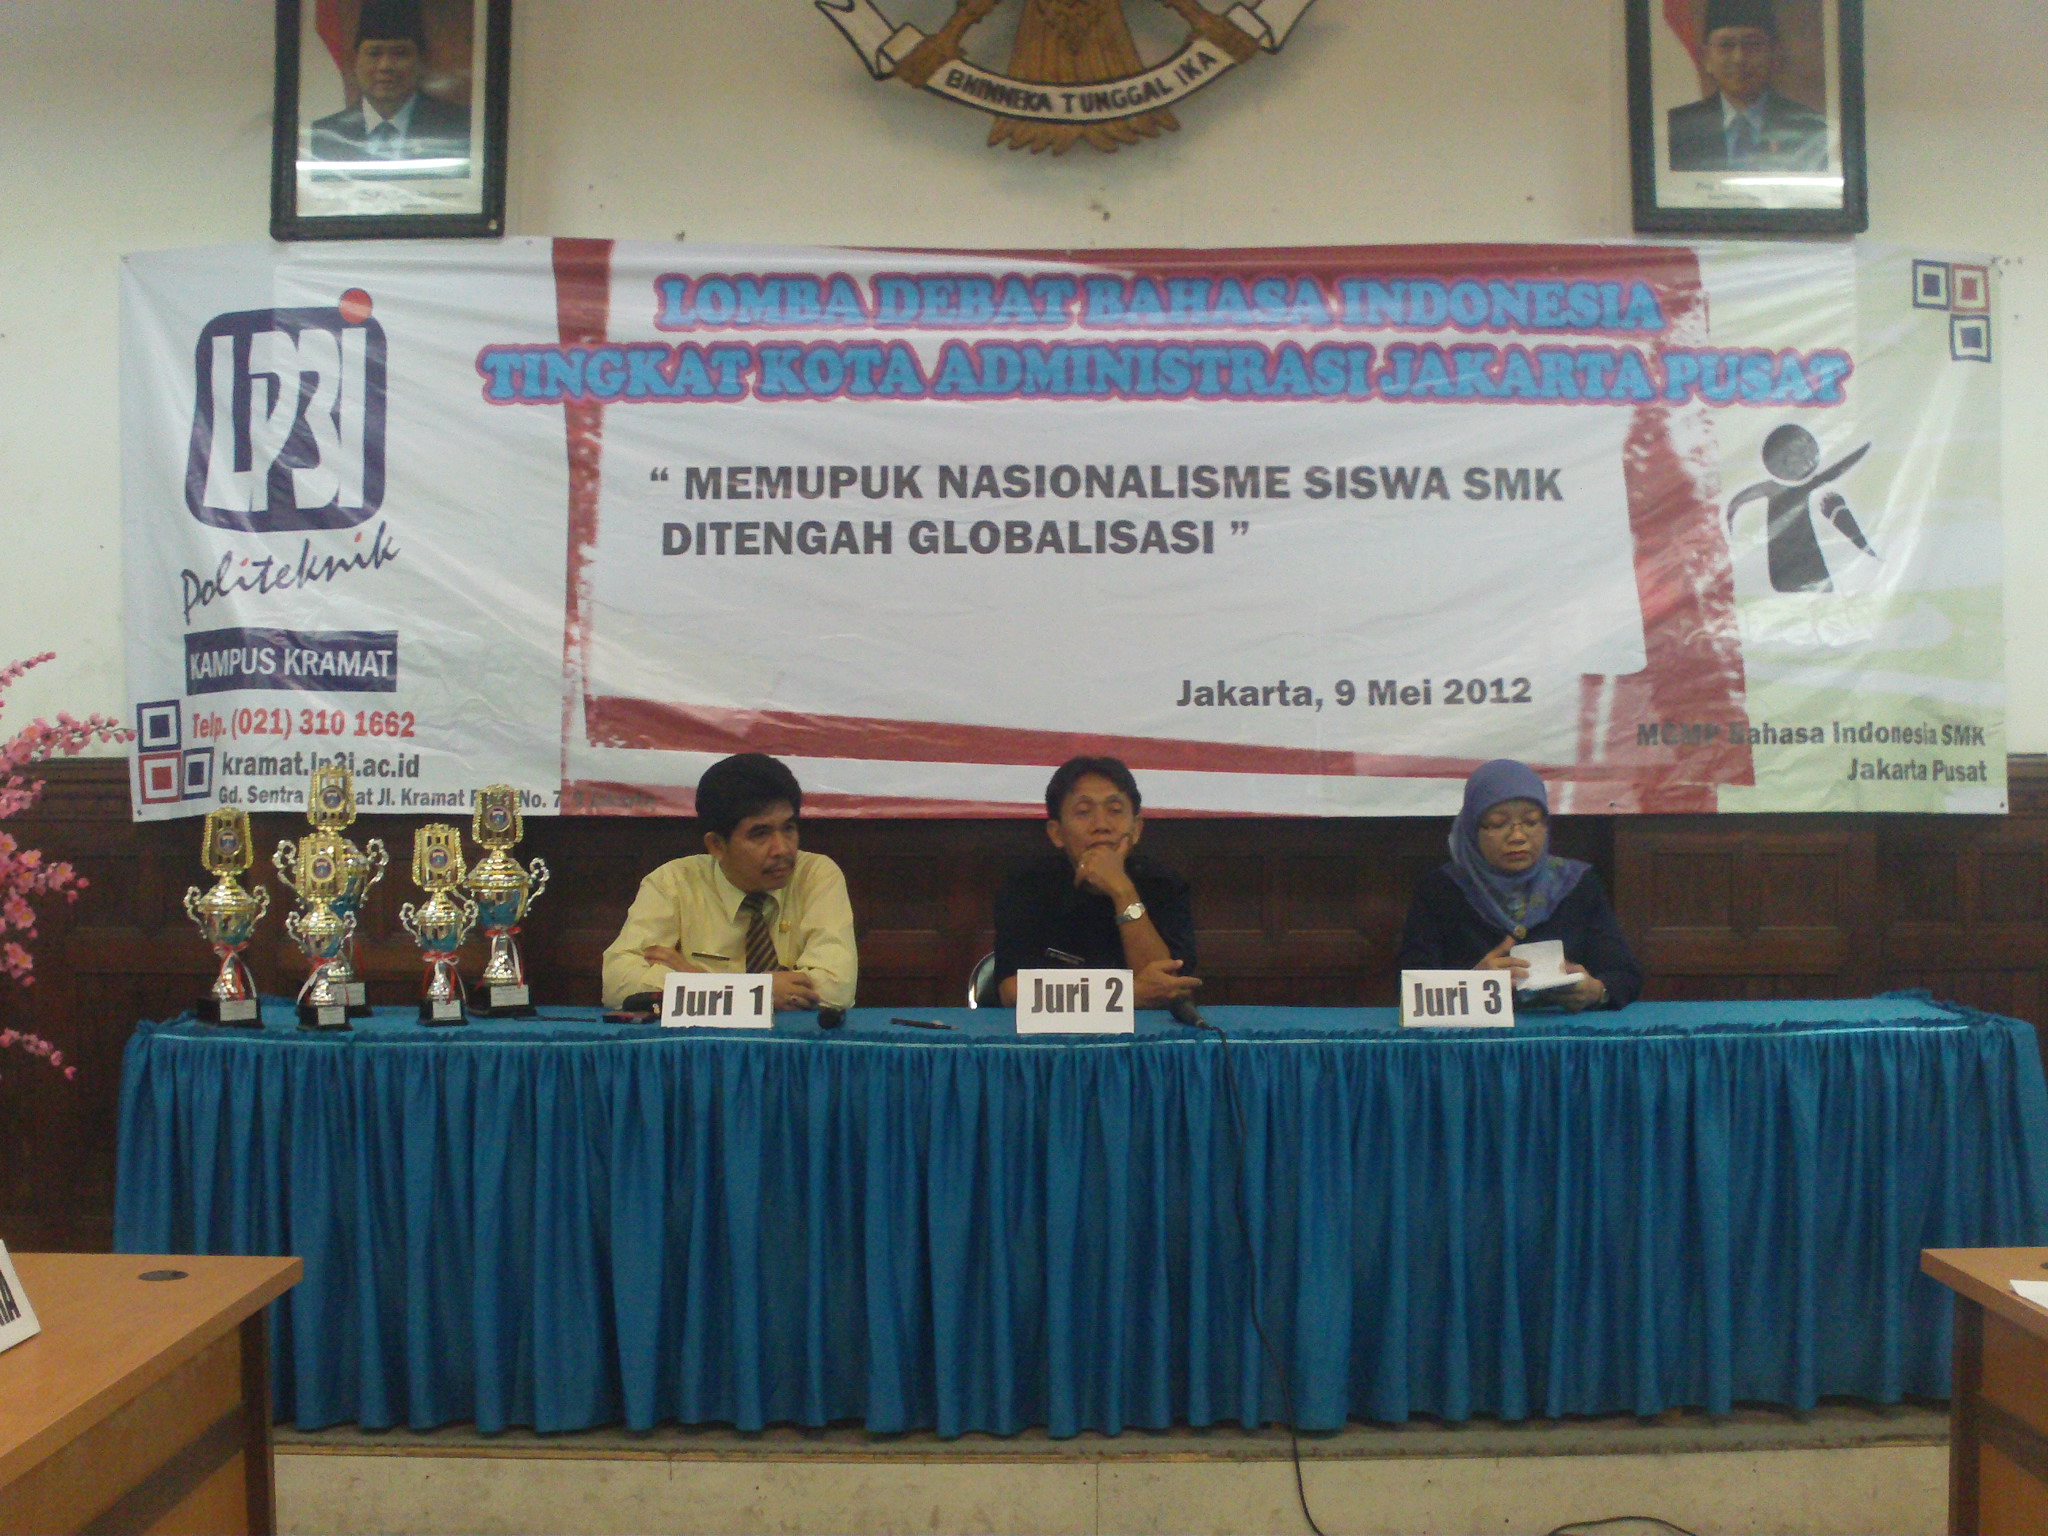 Hasil seleksi lomba debat bahasa Indonesia yang telah dilaksanakan tanggal 9 Mei 2012 di SMKN 1 Jakarta